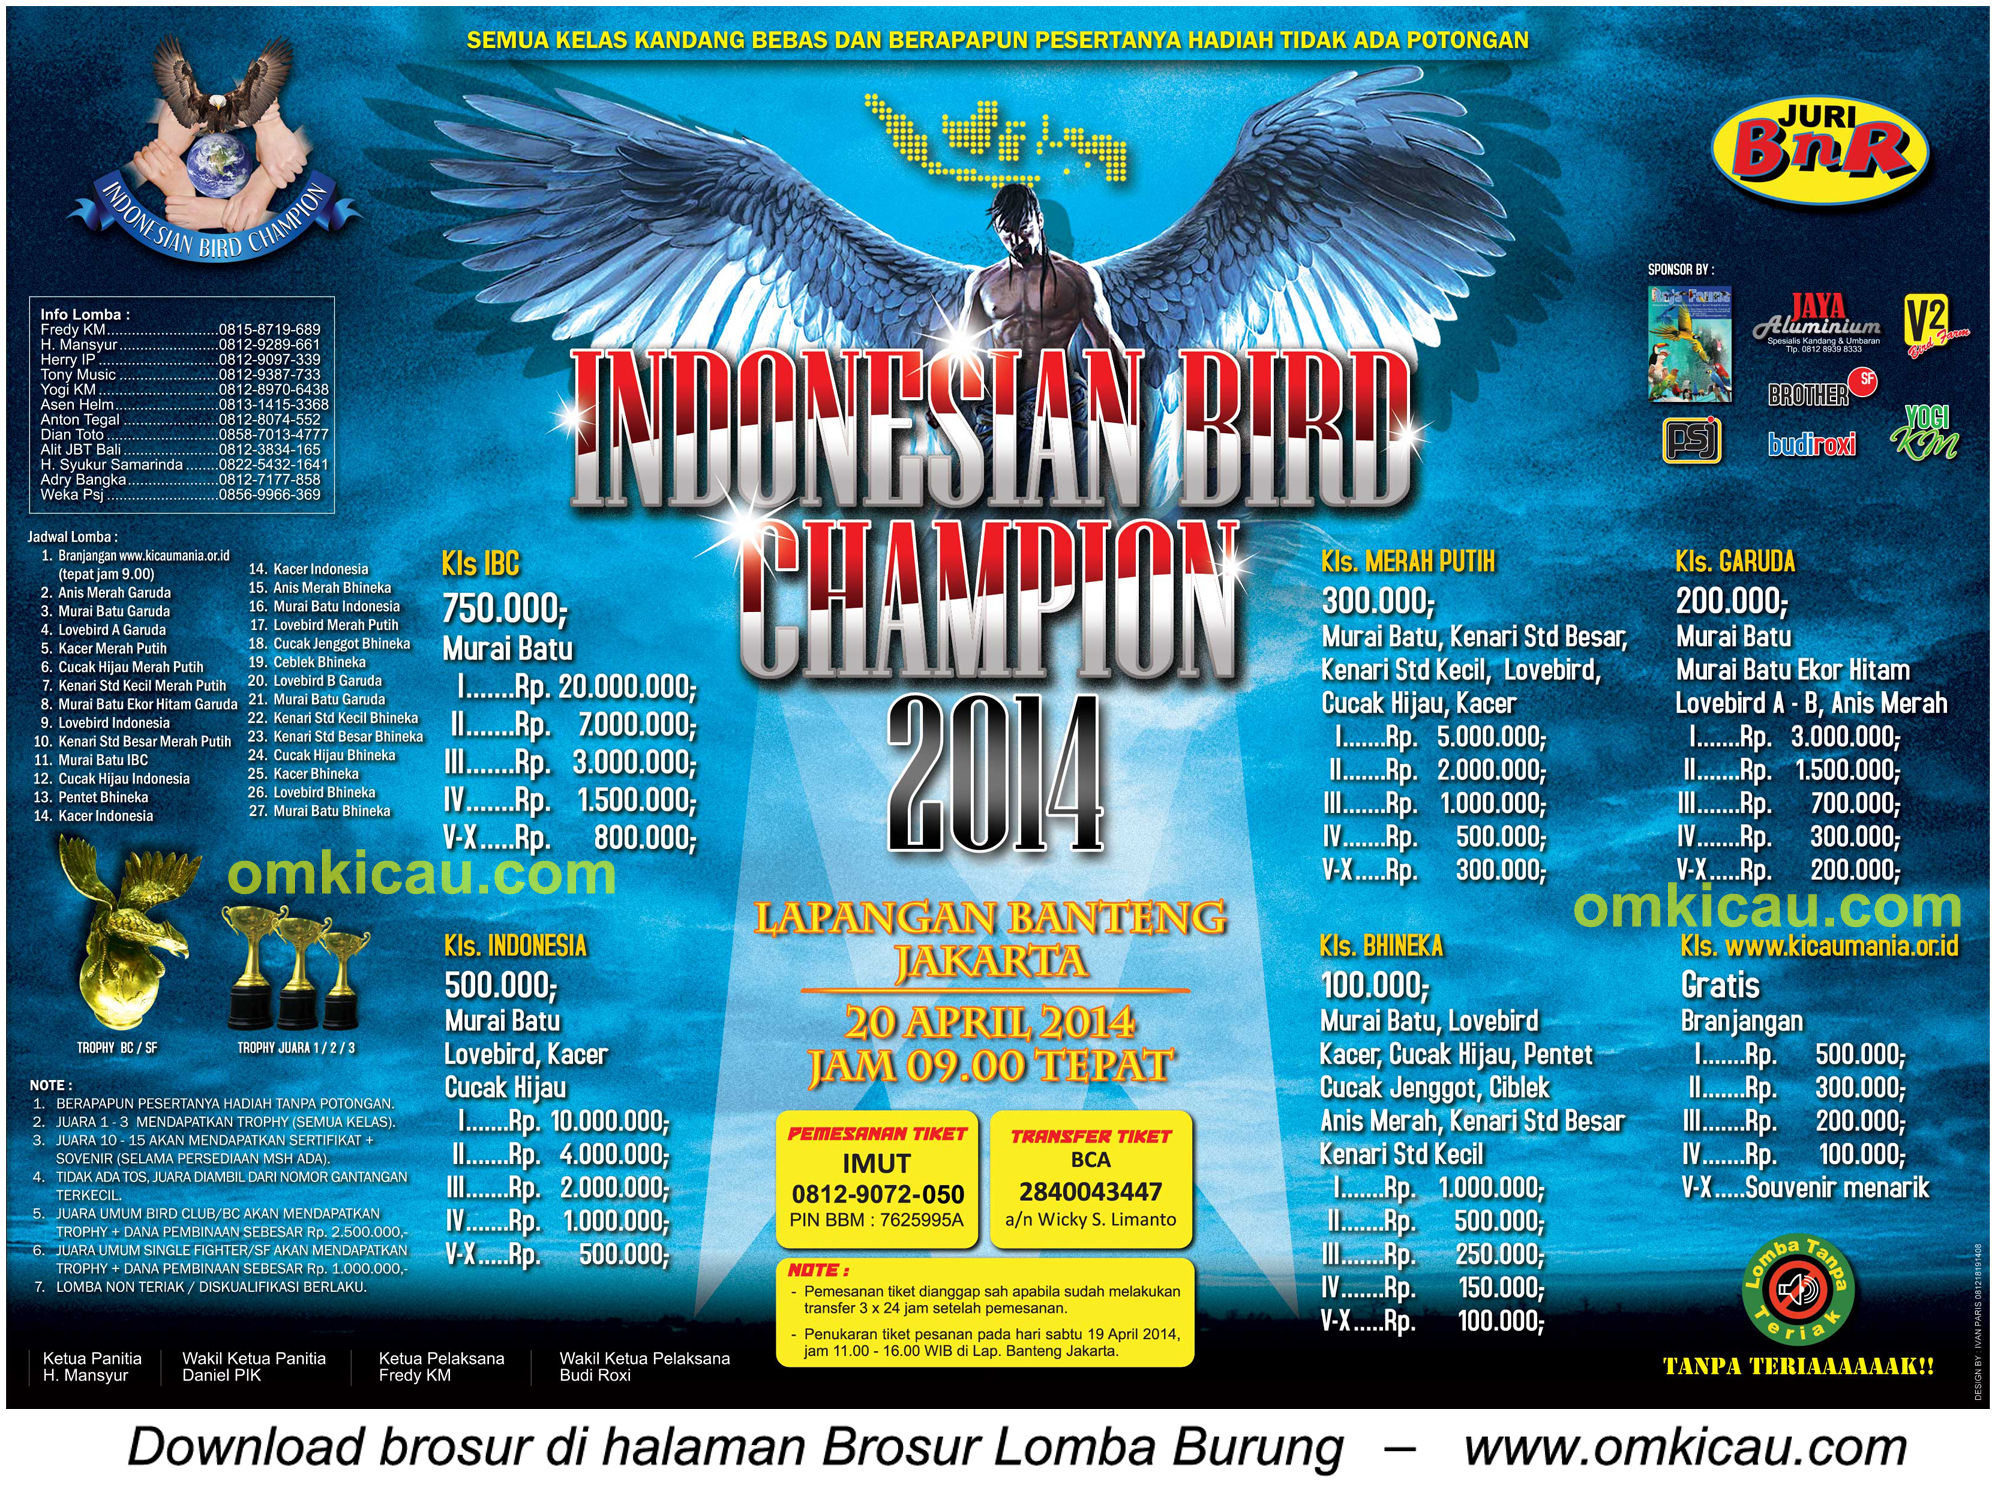 Brosur Lomba Burung Berkicau IBC Cup - Jakarta, 20 April 2014